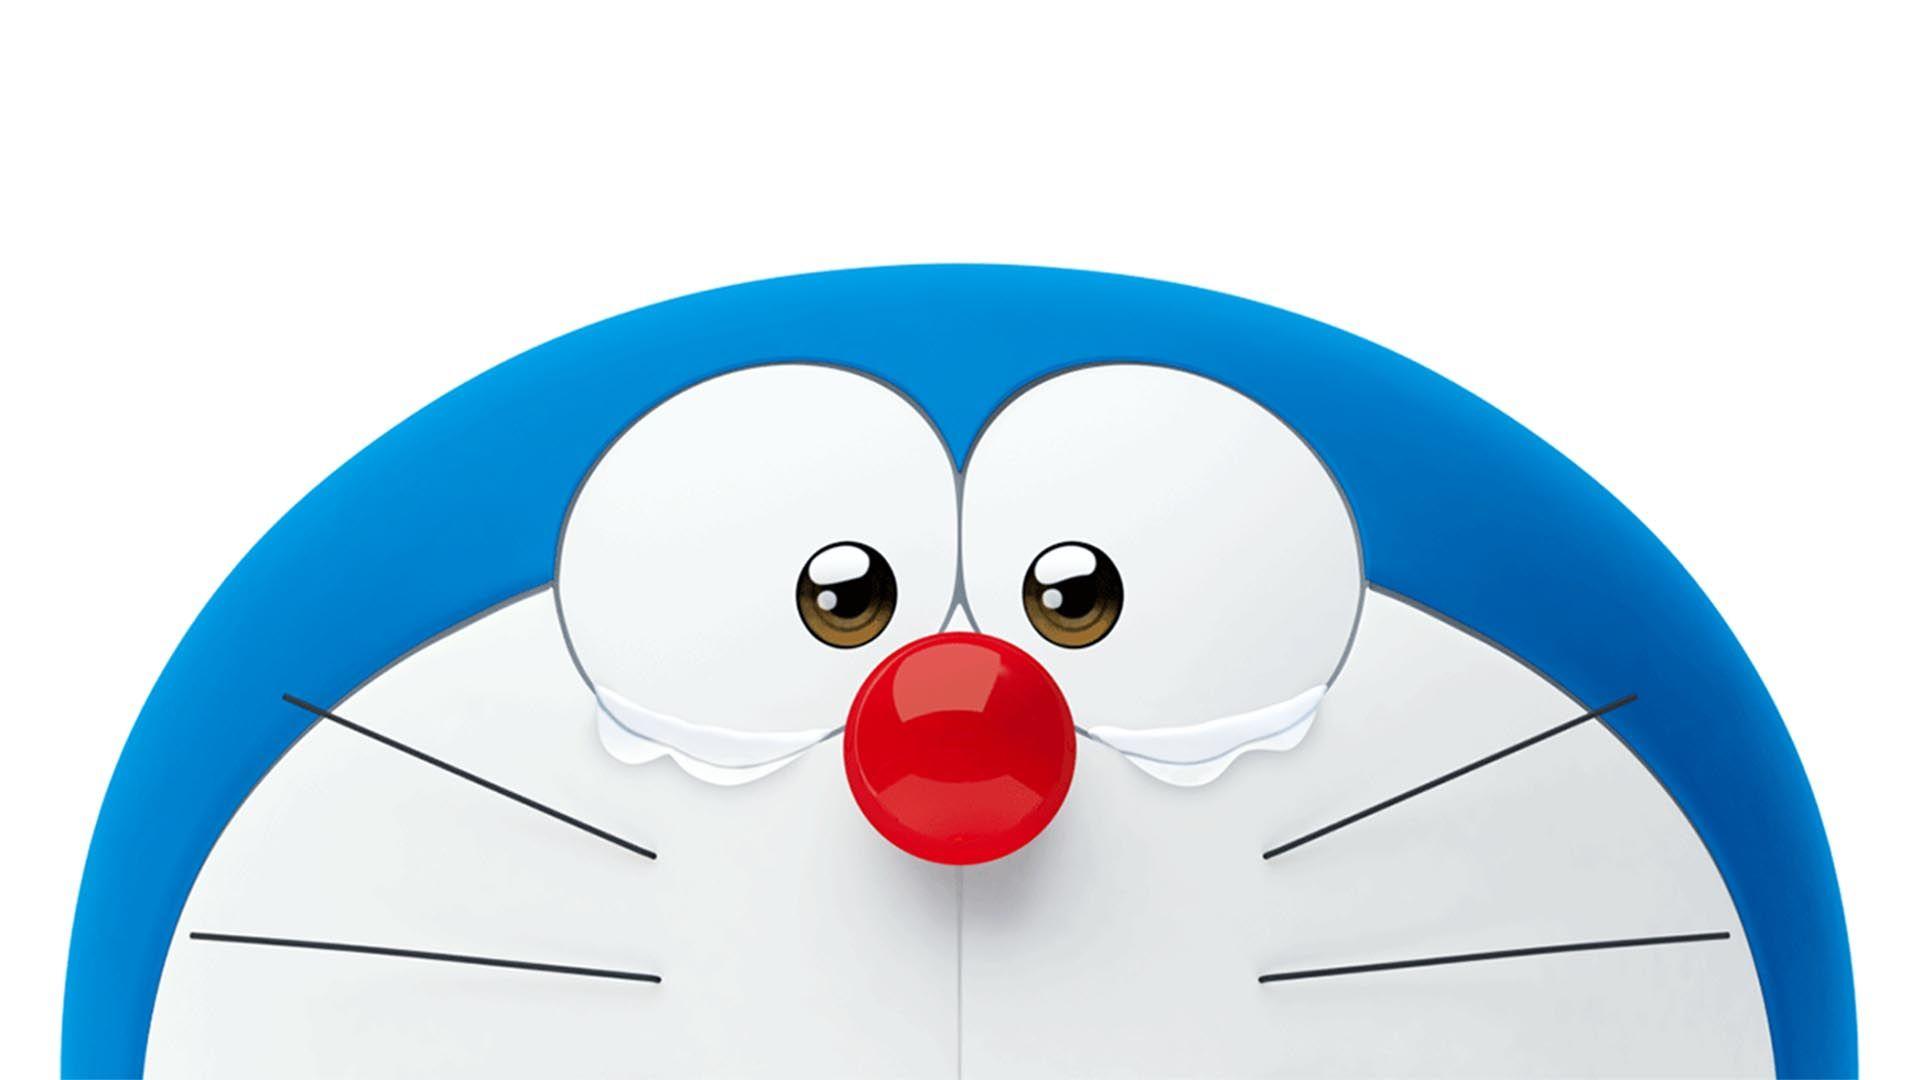  Doraemon  HD  Wallpapers  Wallpaper  Cave